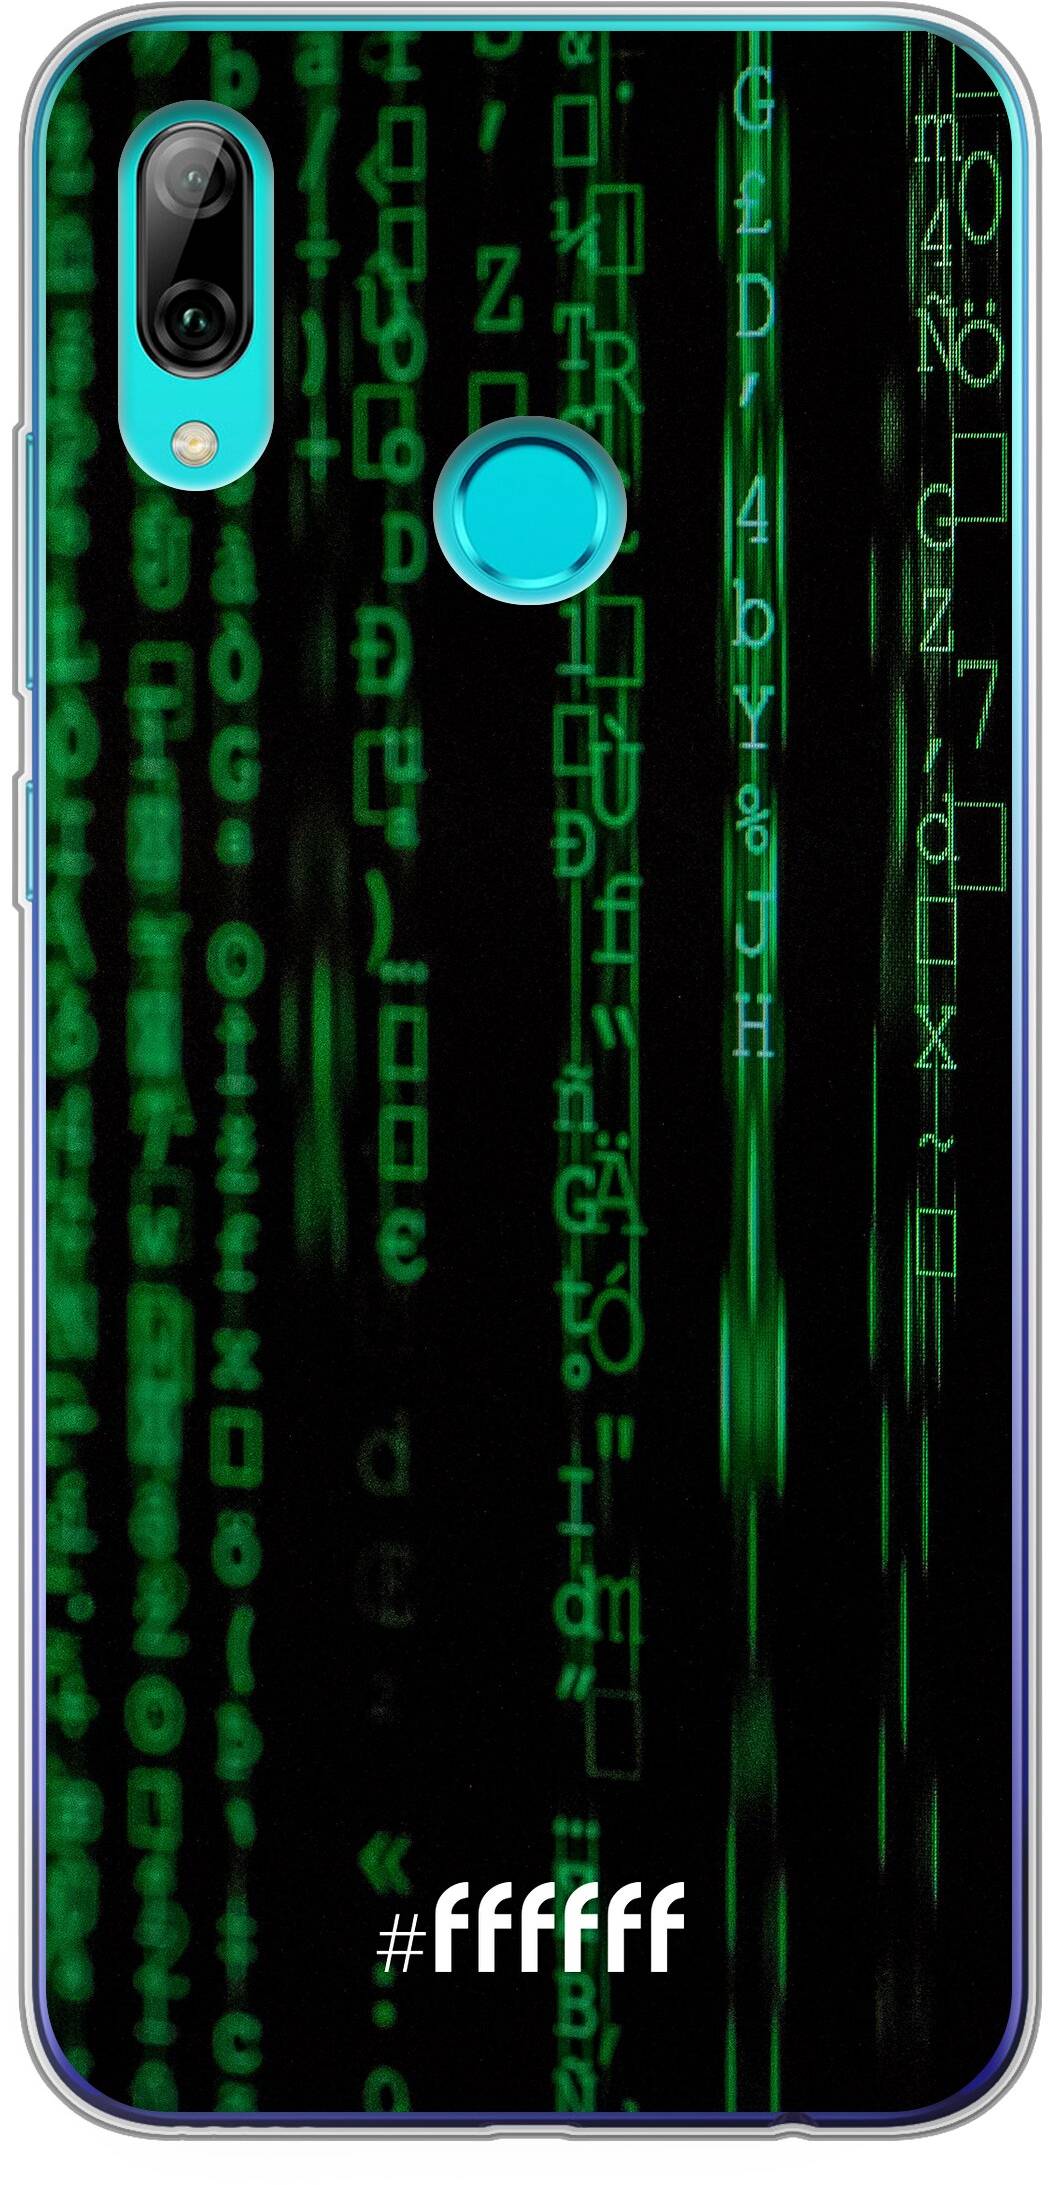 Hacking The Matrix 10 Lite